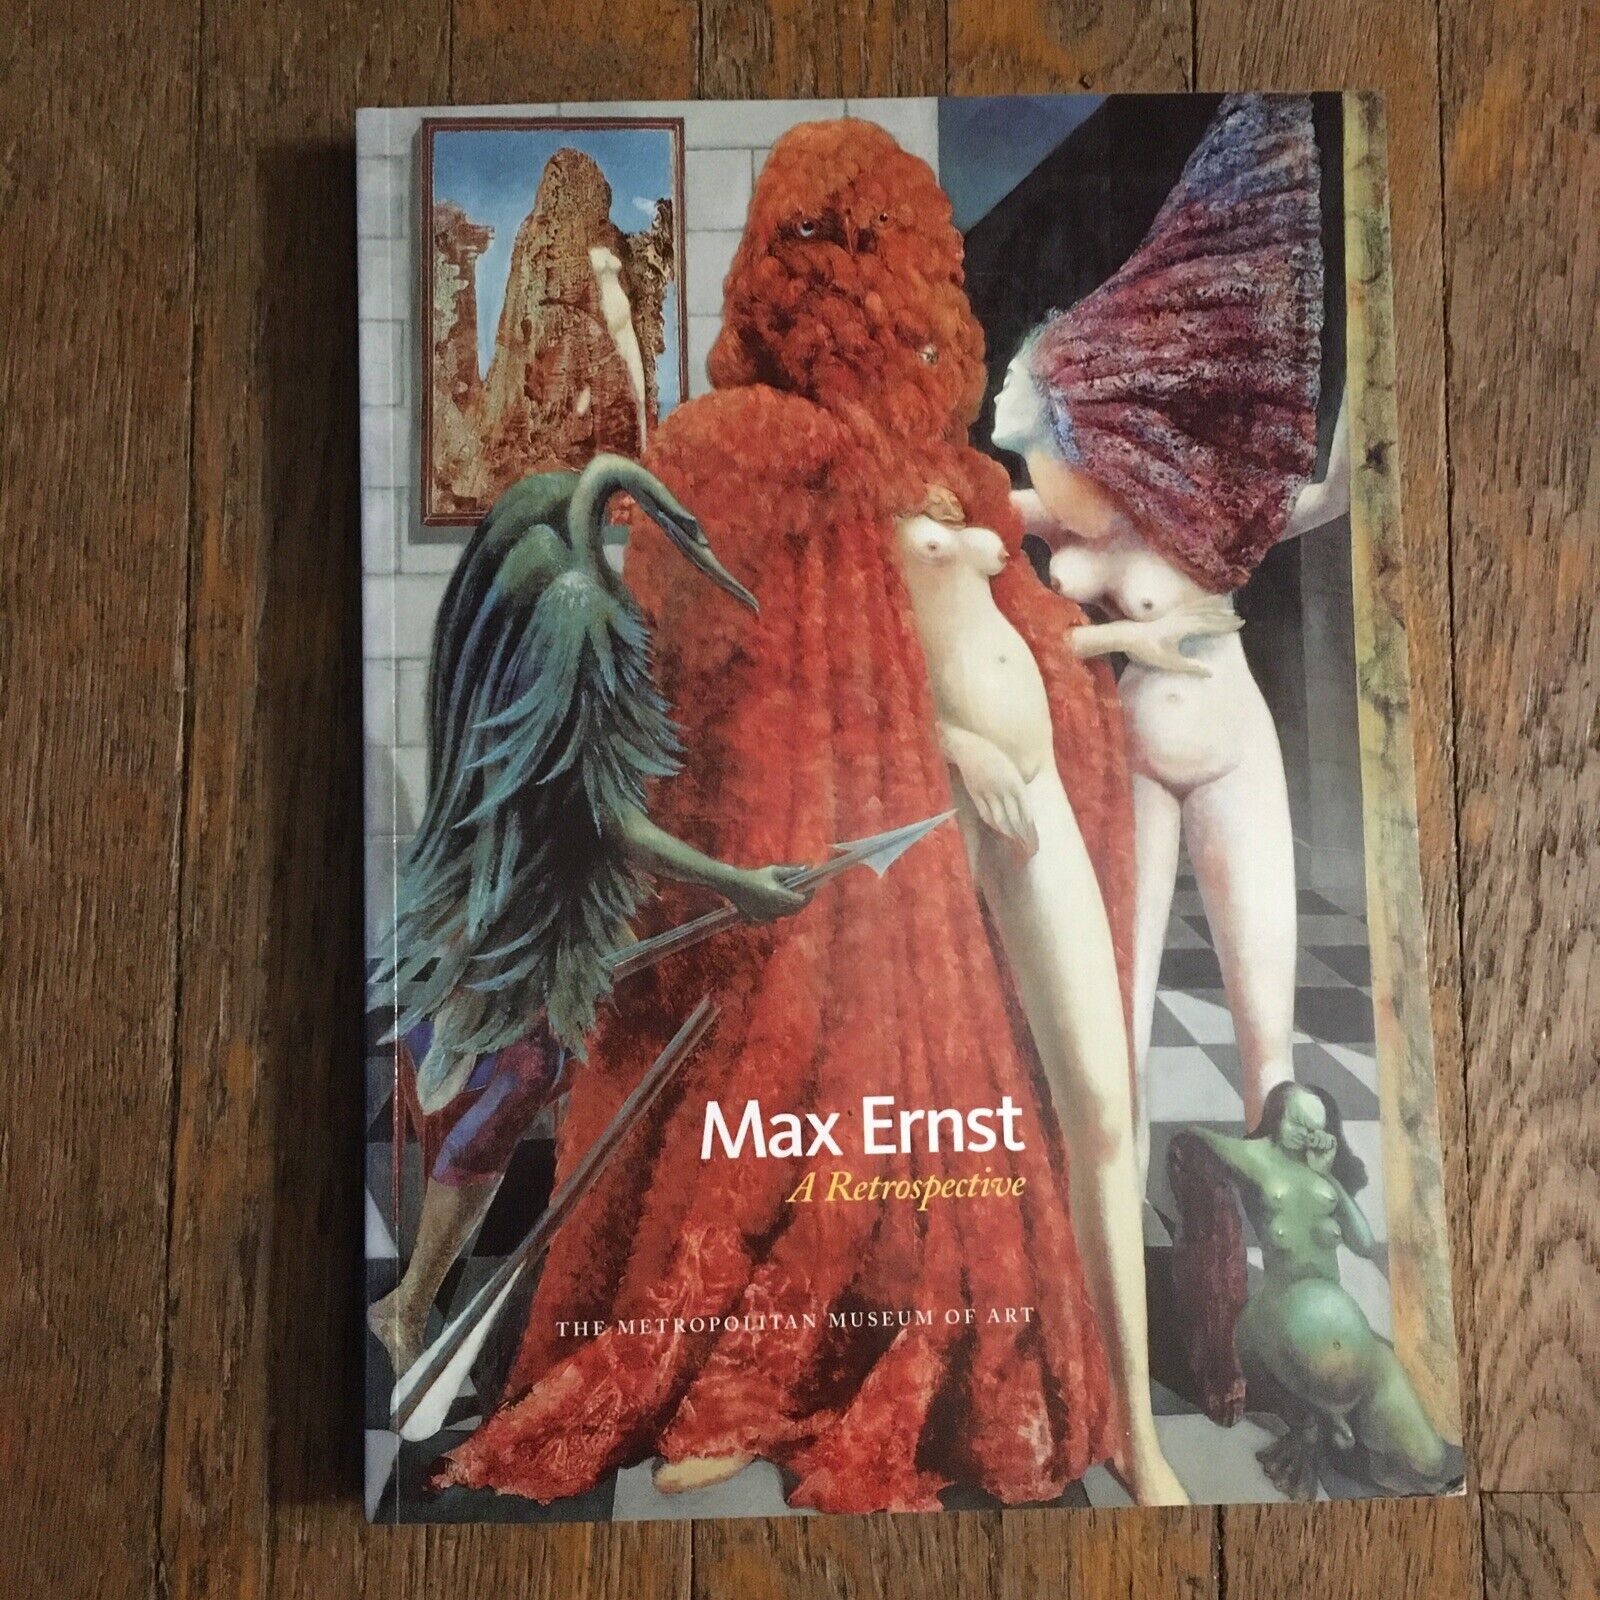 MAX ERNST: A RETROSPECTIVE (METROPOLITAN MUSEUM OF ART By Werner Spies & Sabine